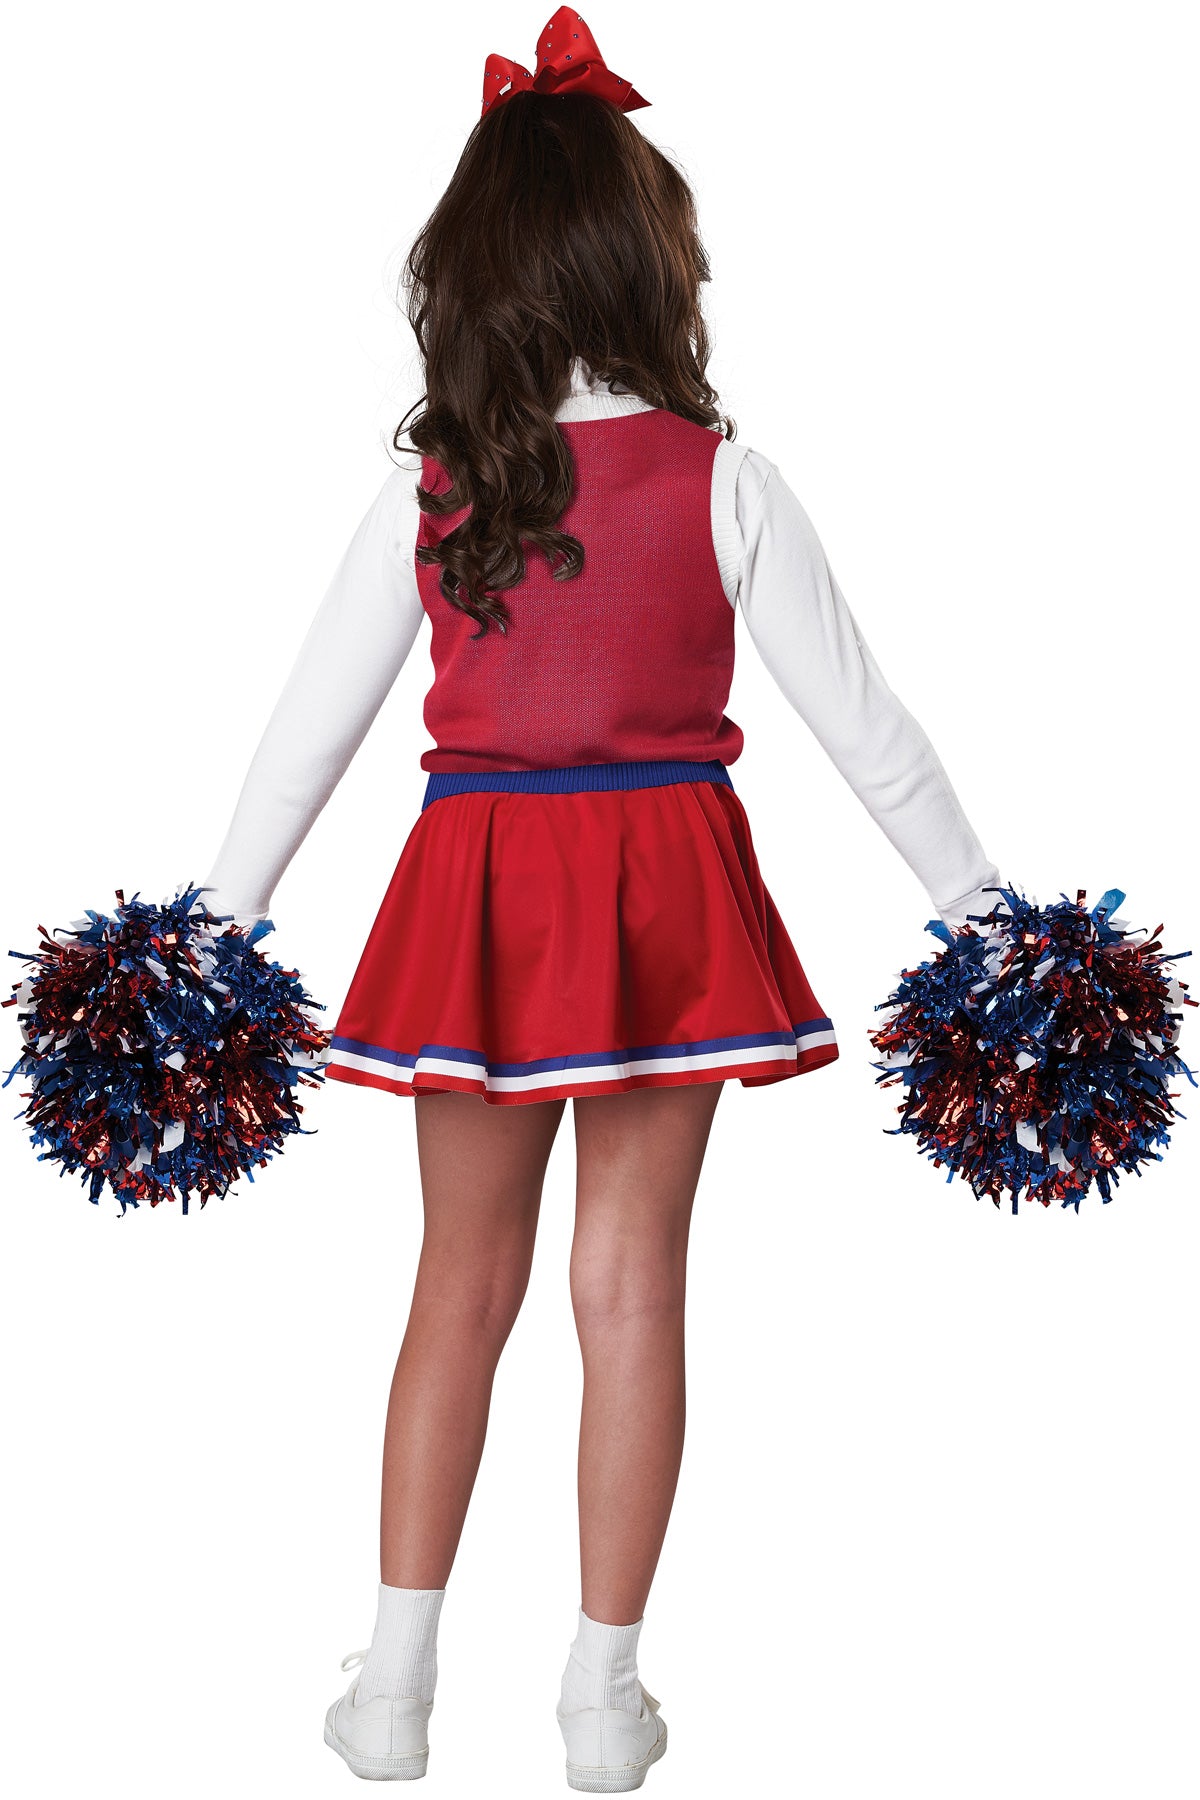 Underwraps Womens Blue Cheerleader Costume - Size Large